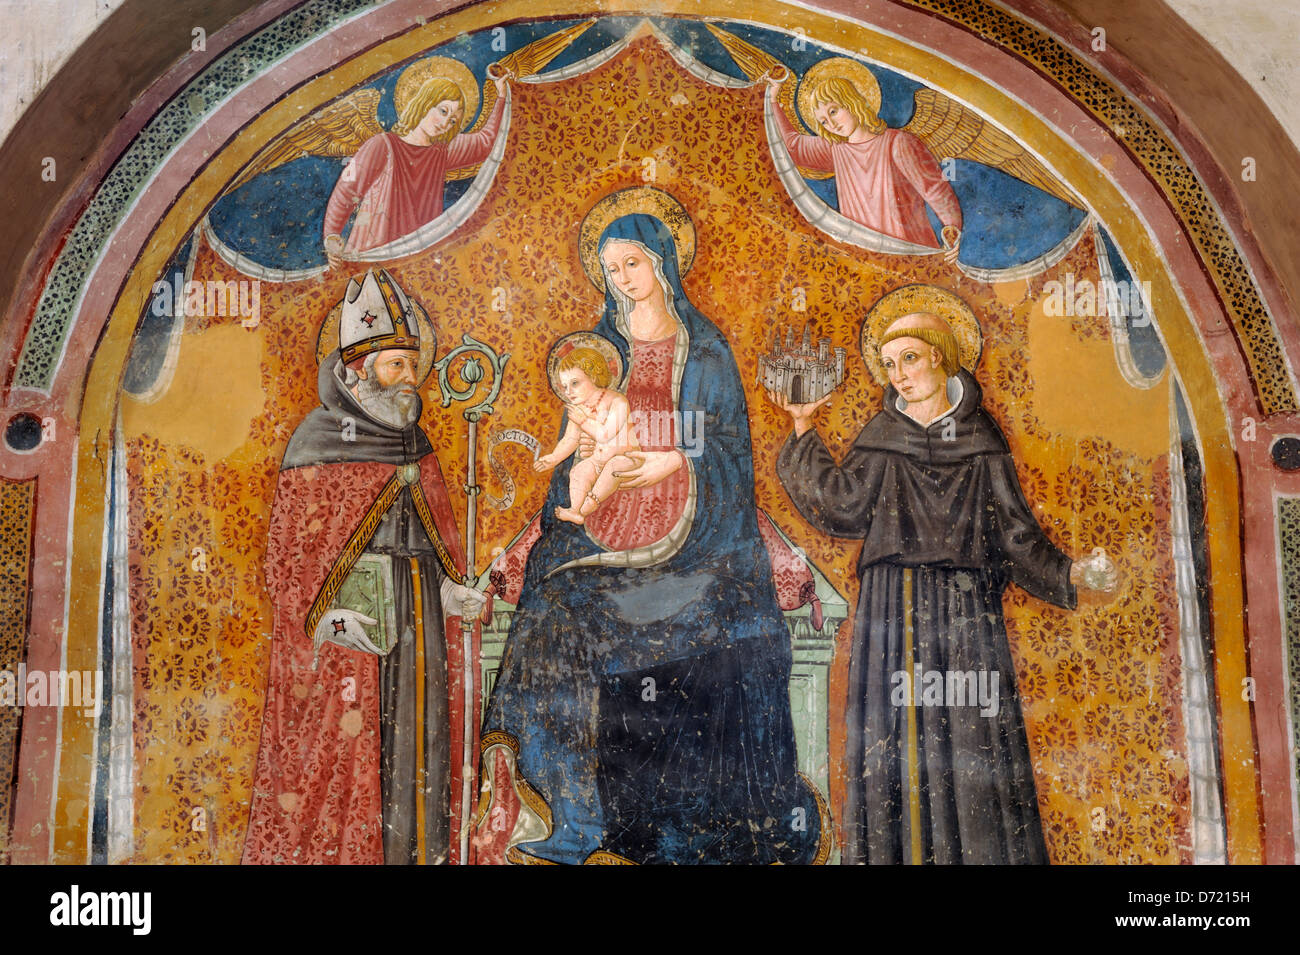 Cuadro epoca medieval iglesia fotografías e imágenes de alta resolución -  Alamy